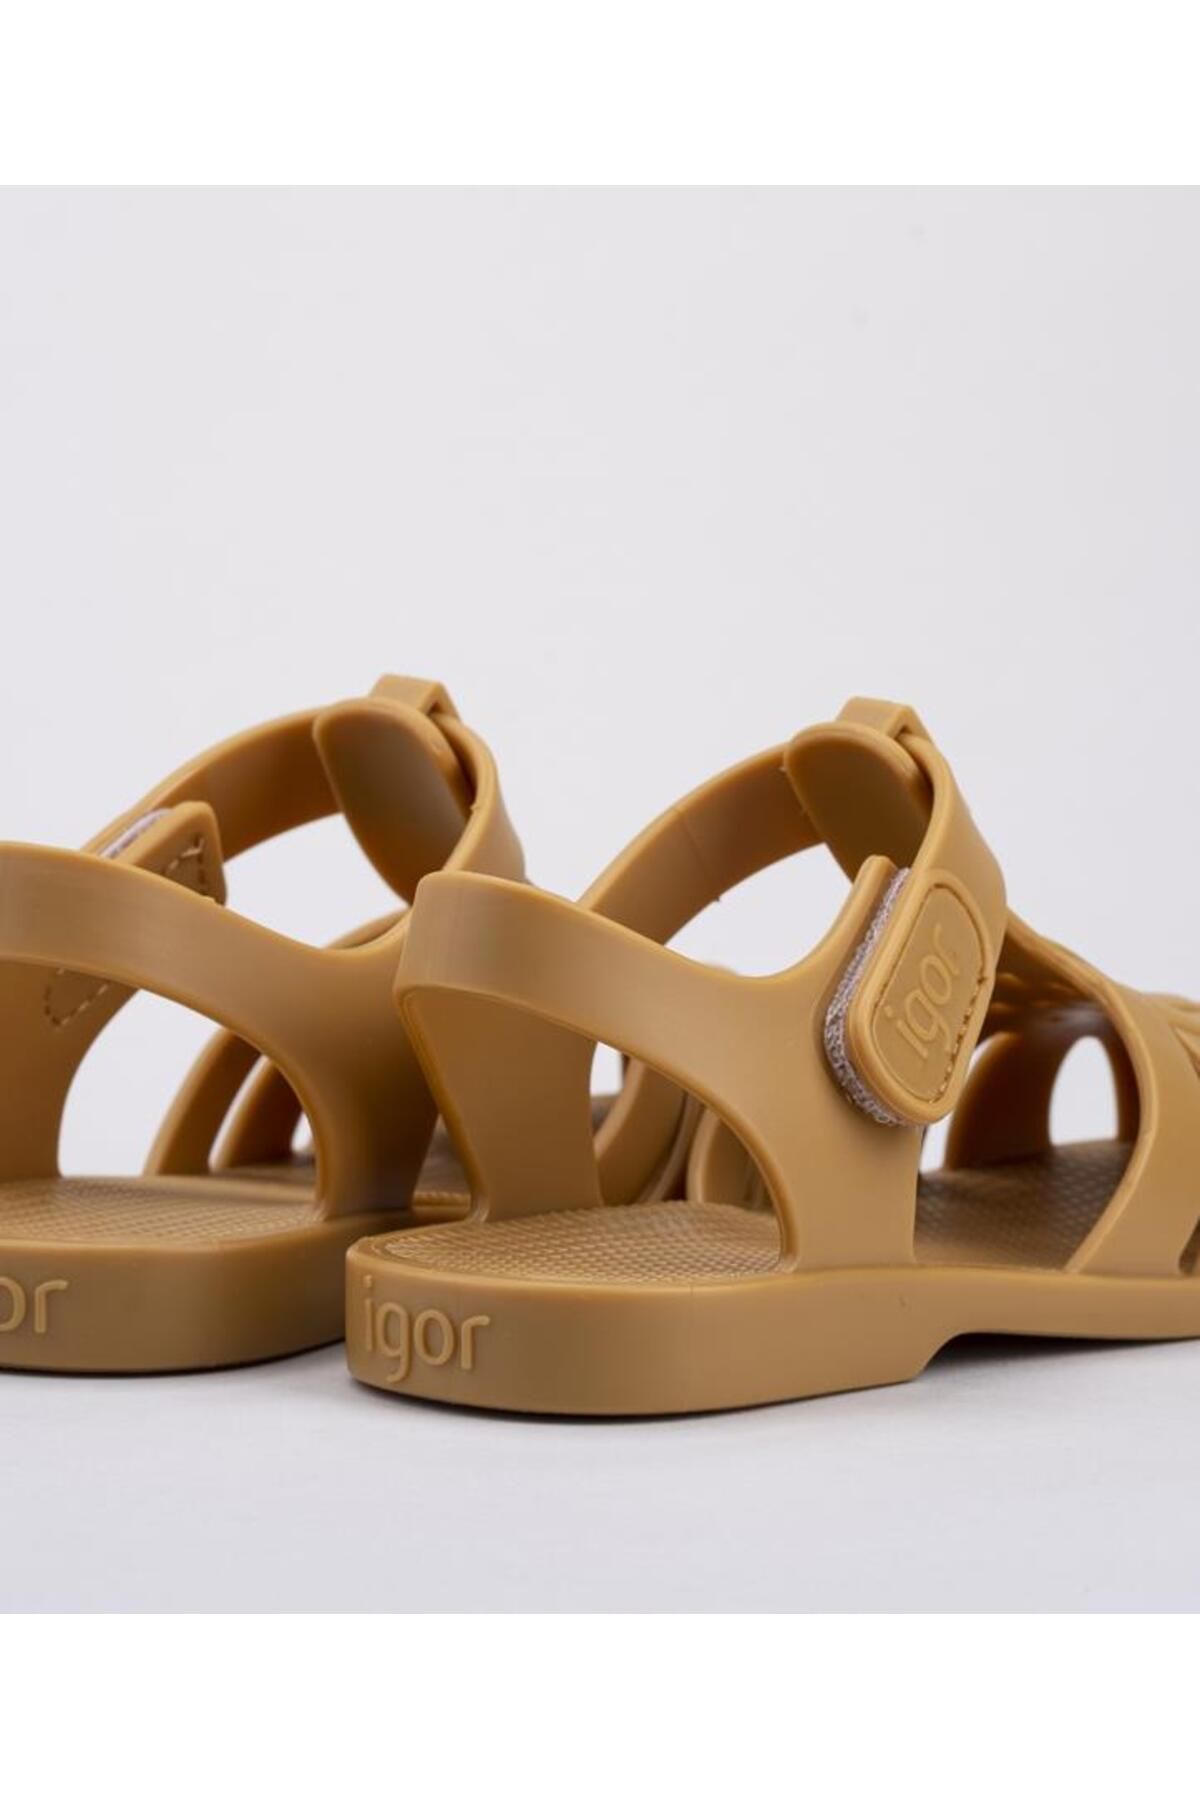 IGOR S10288 Clasa Velcro Mestaza Sandals